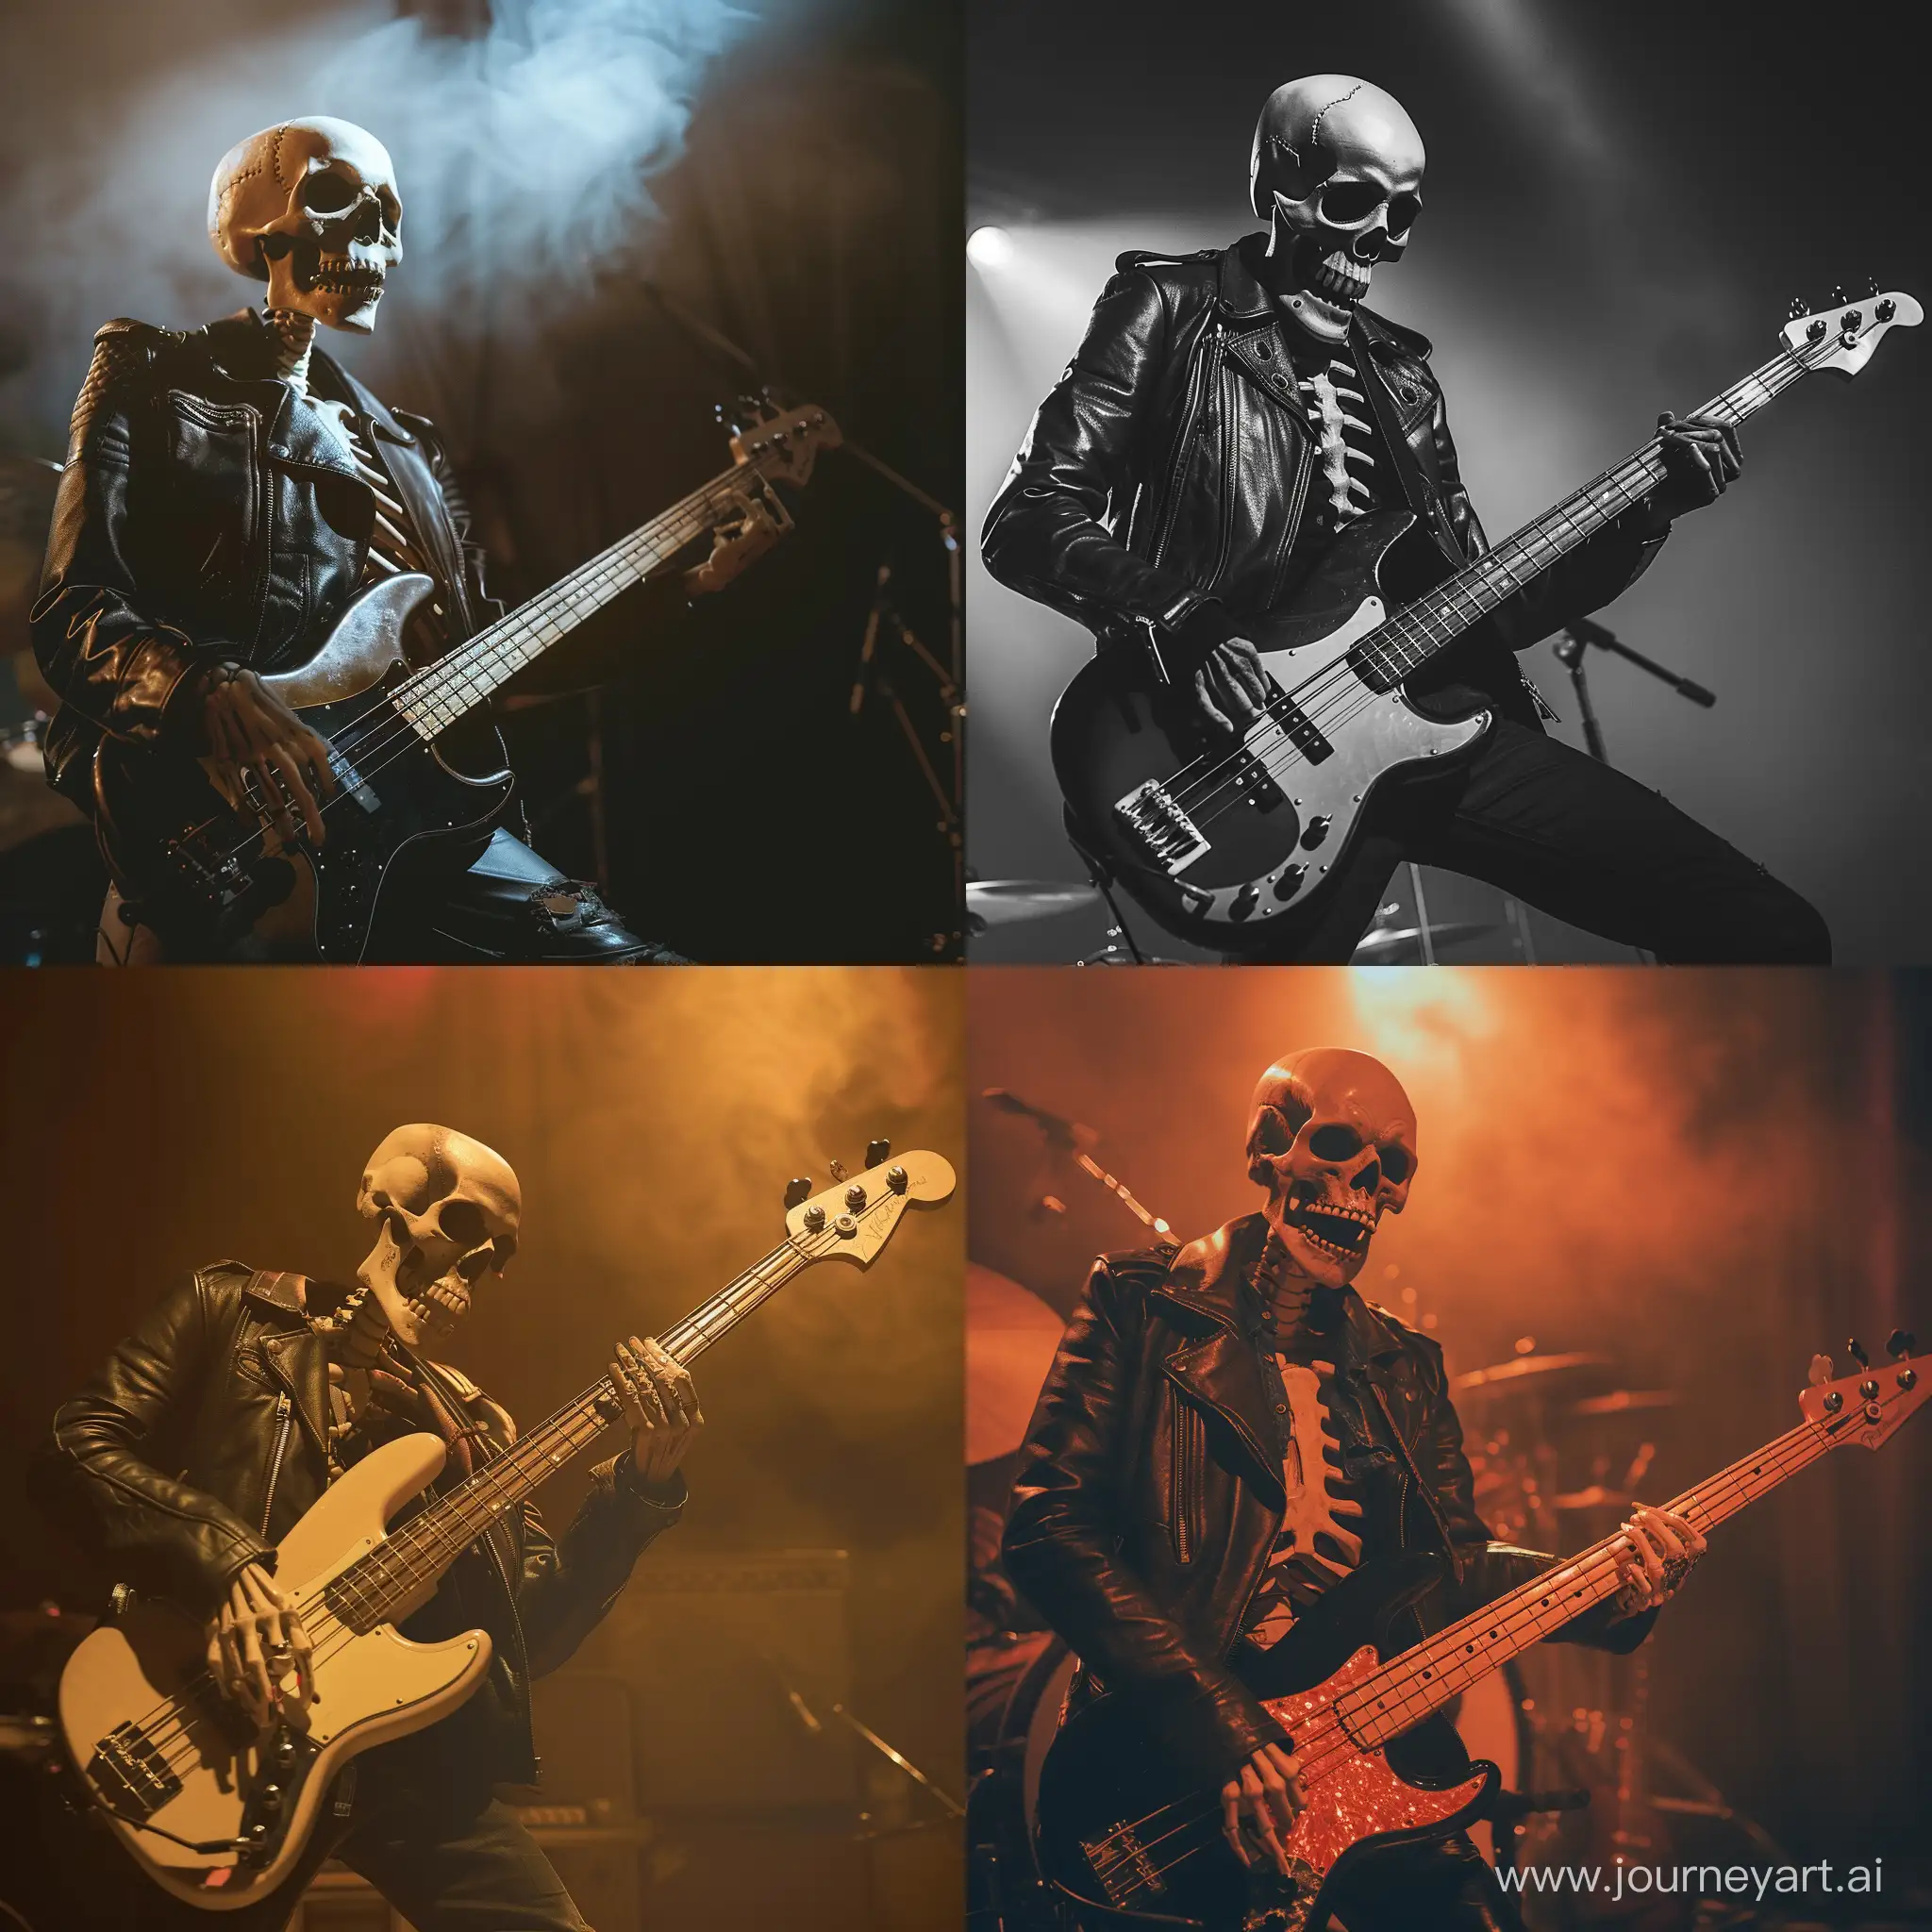 Rocking-Skeleton-in-Leather-Jacket-Playing-Bass-Guitar-at-Dimly-Lit-Rock-Fest